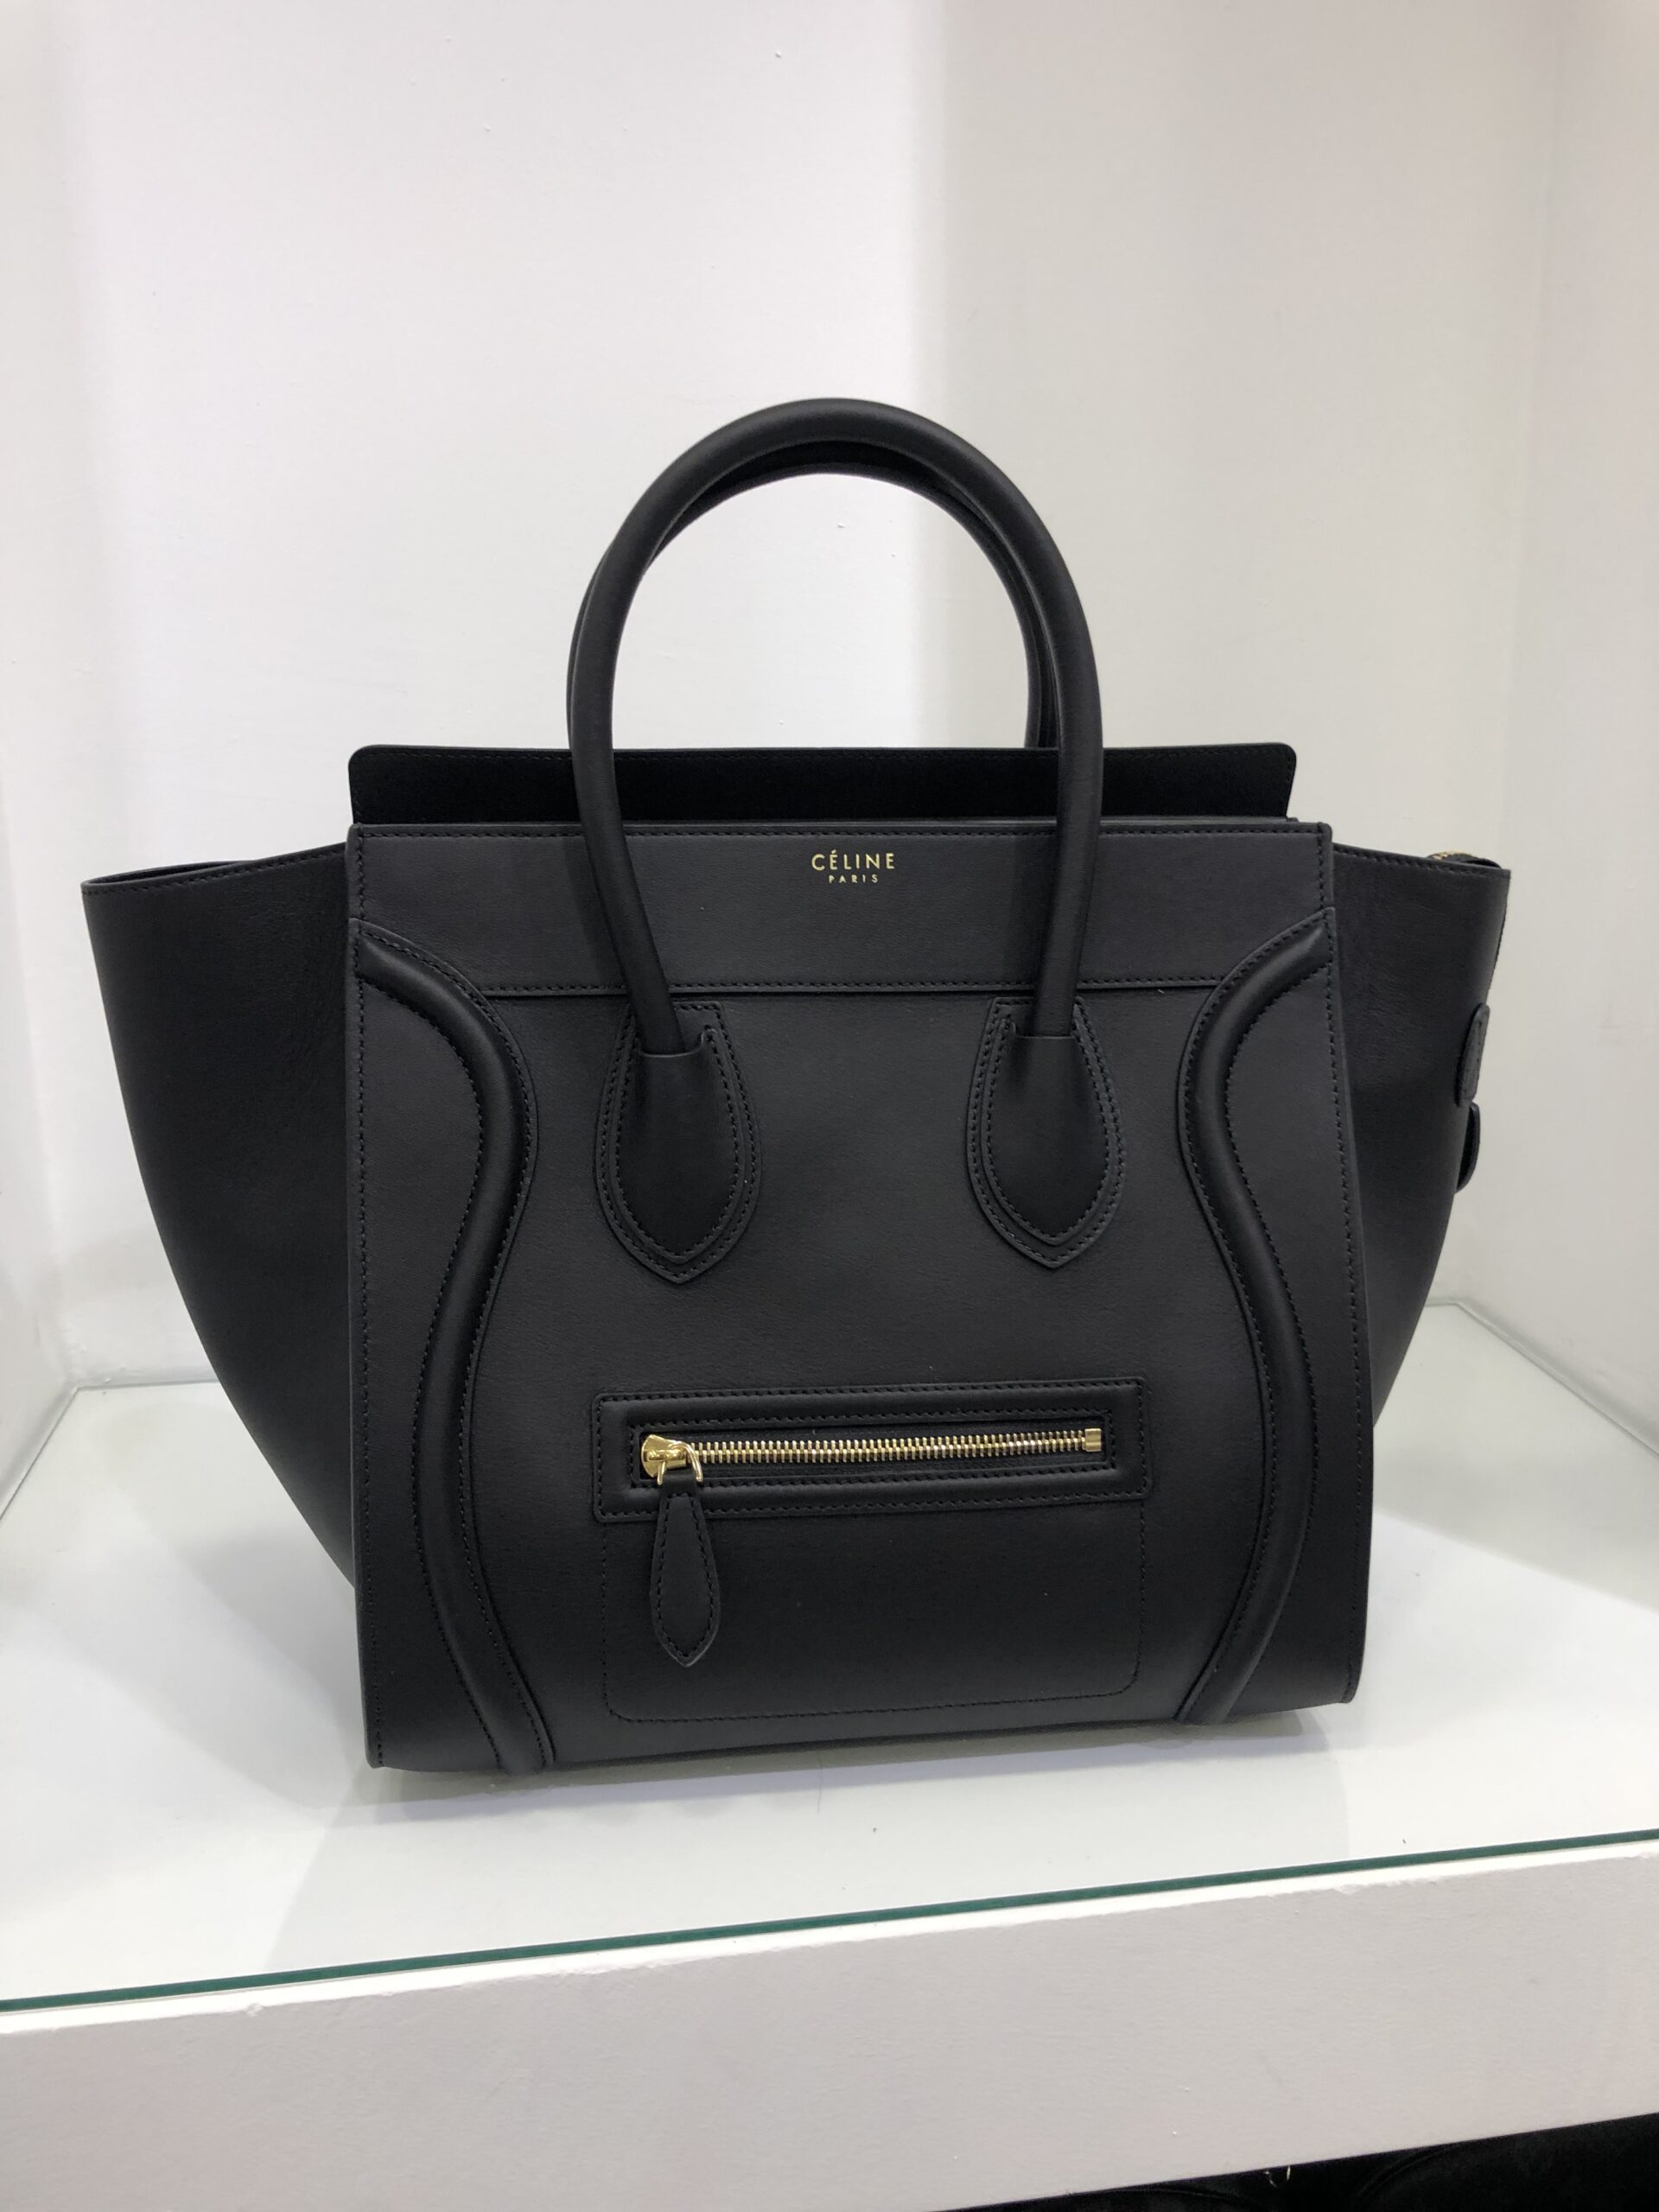 Celine/ luggage tote Bag - Rn Atelier Luxury Clothing, Bags, Accessories